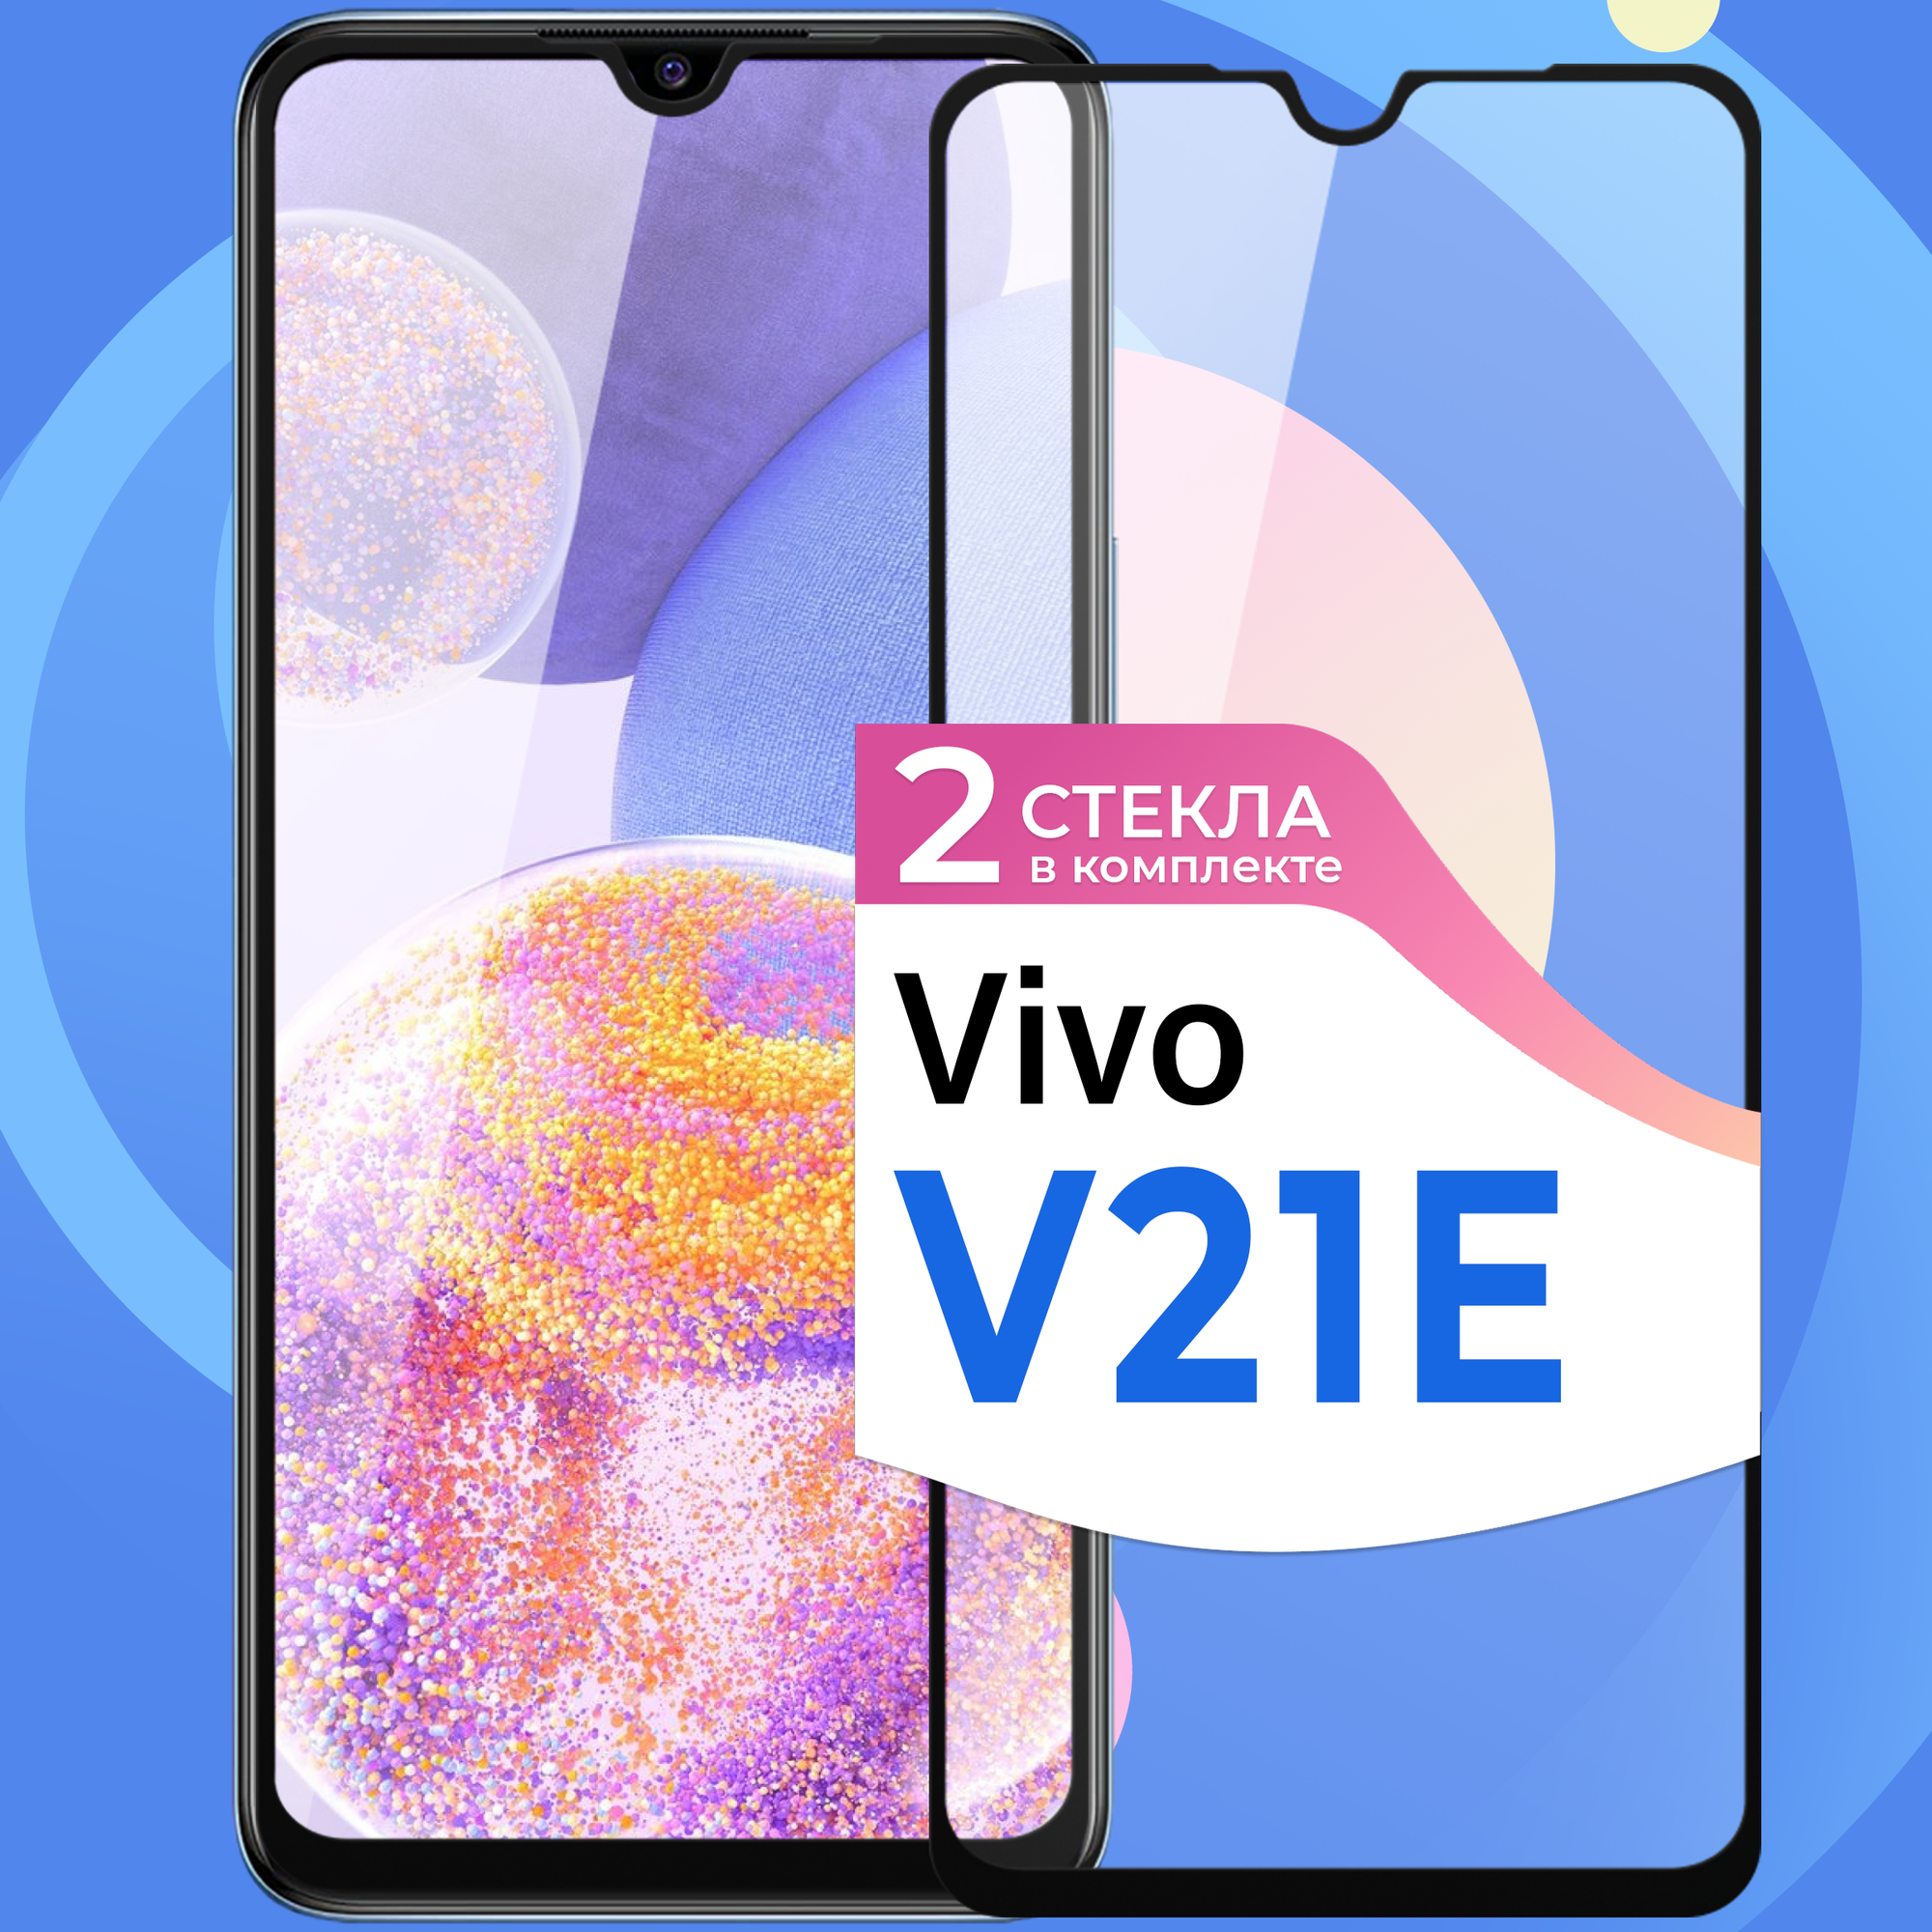 Комплект 2 шт. Защитное стекло на телефон Vivo V21E / Противоударное олеофобное стекло для смартфона Виво В21Е